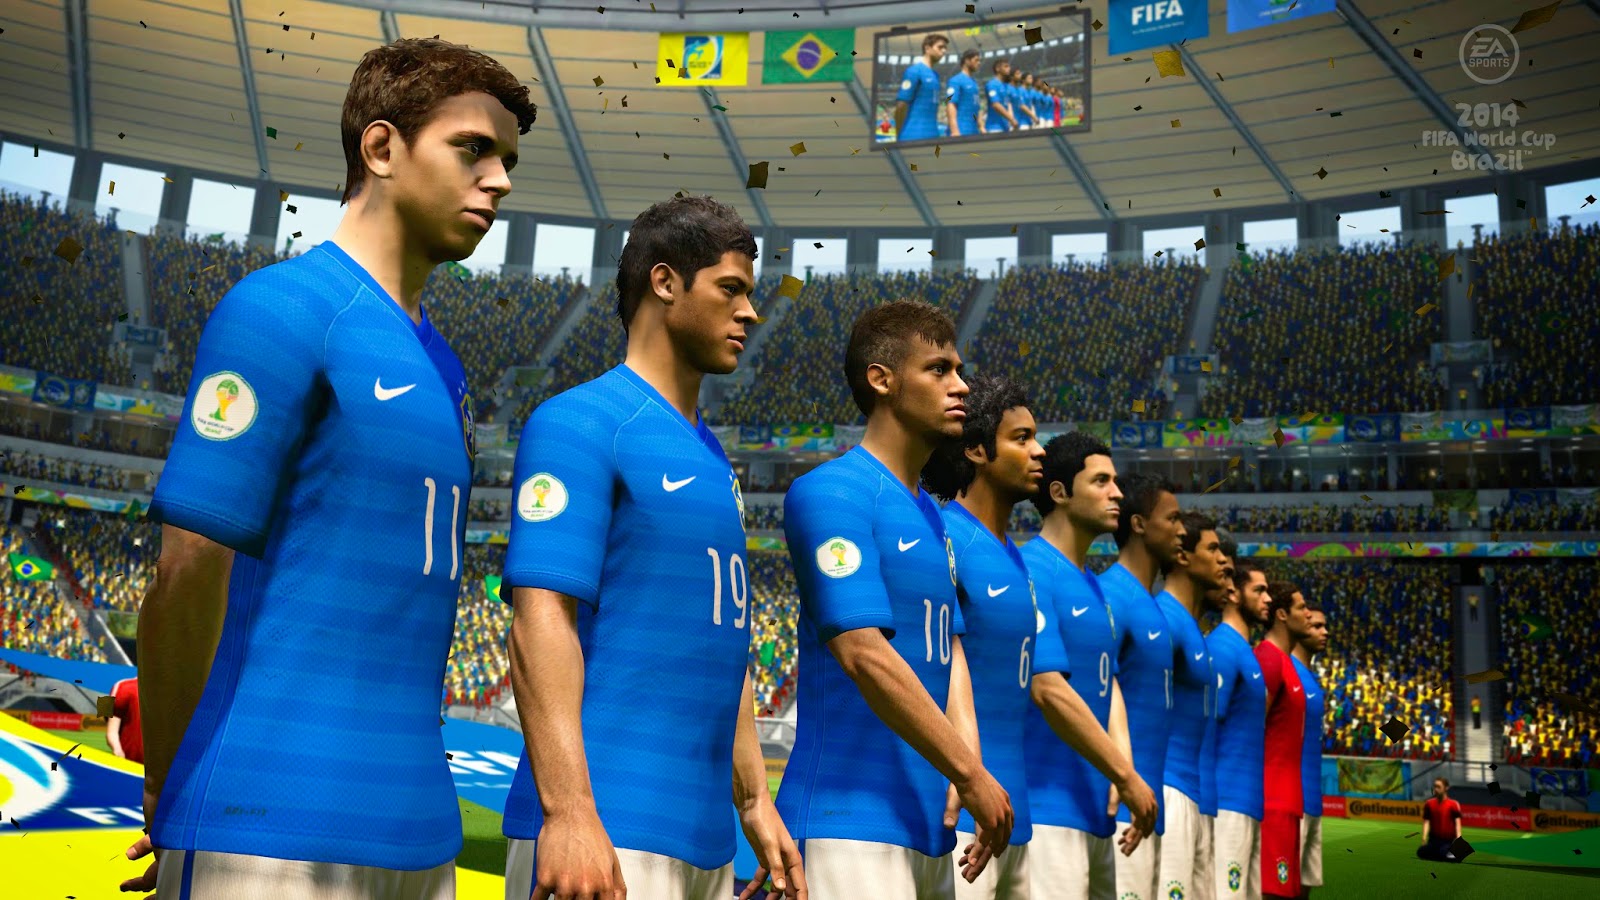 Jogo PS3 - FIFA 14 COPA DO MUNDO